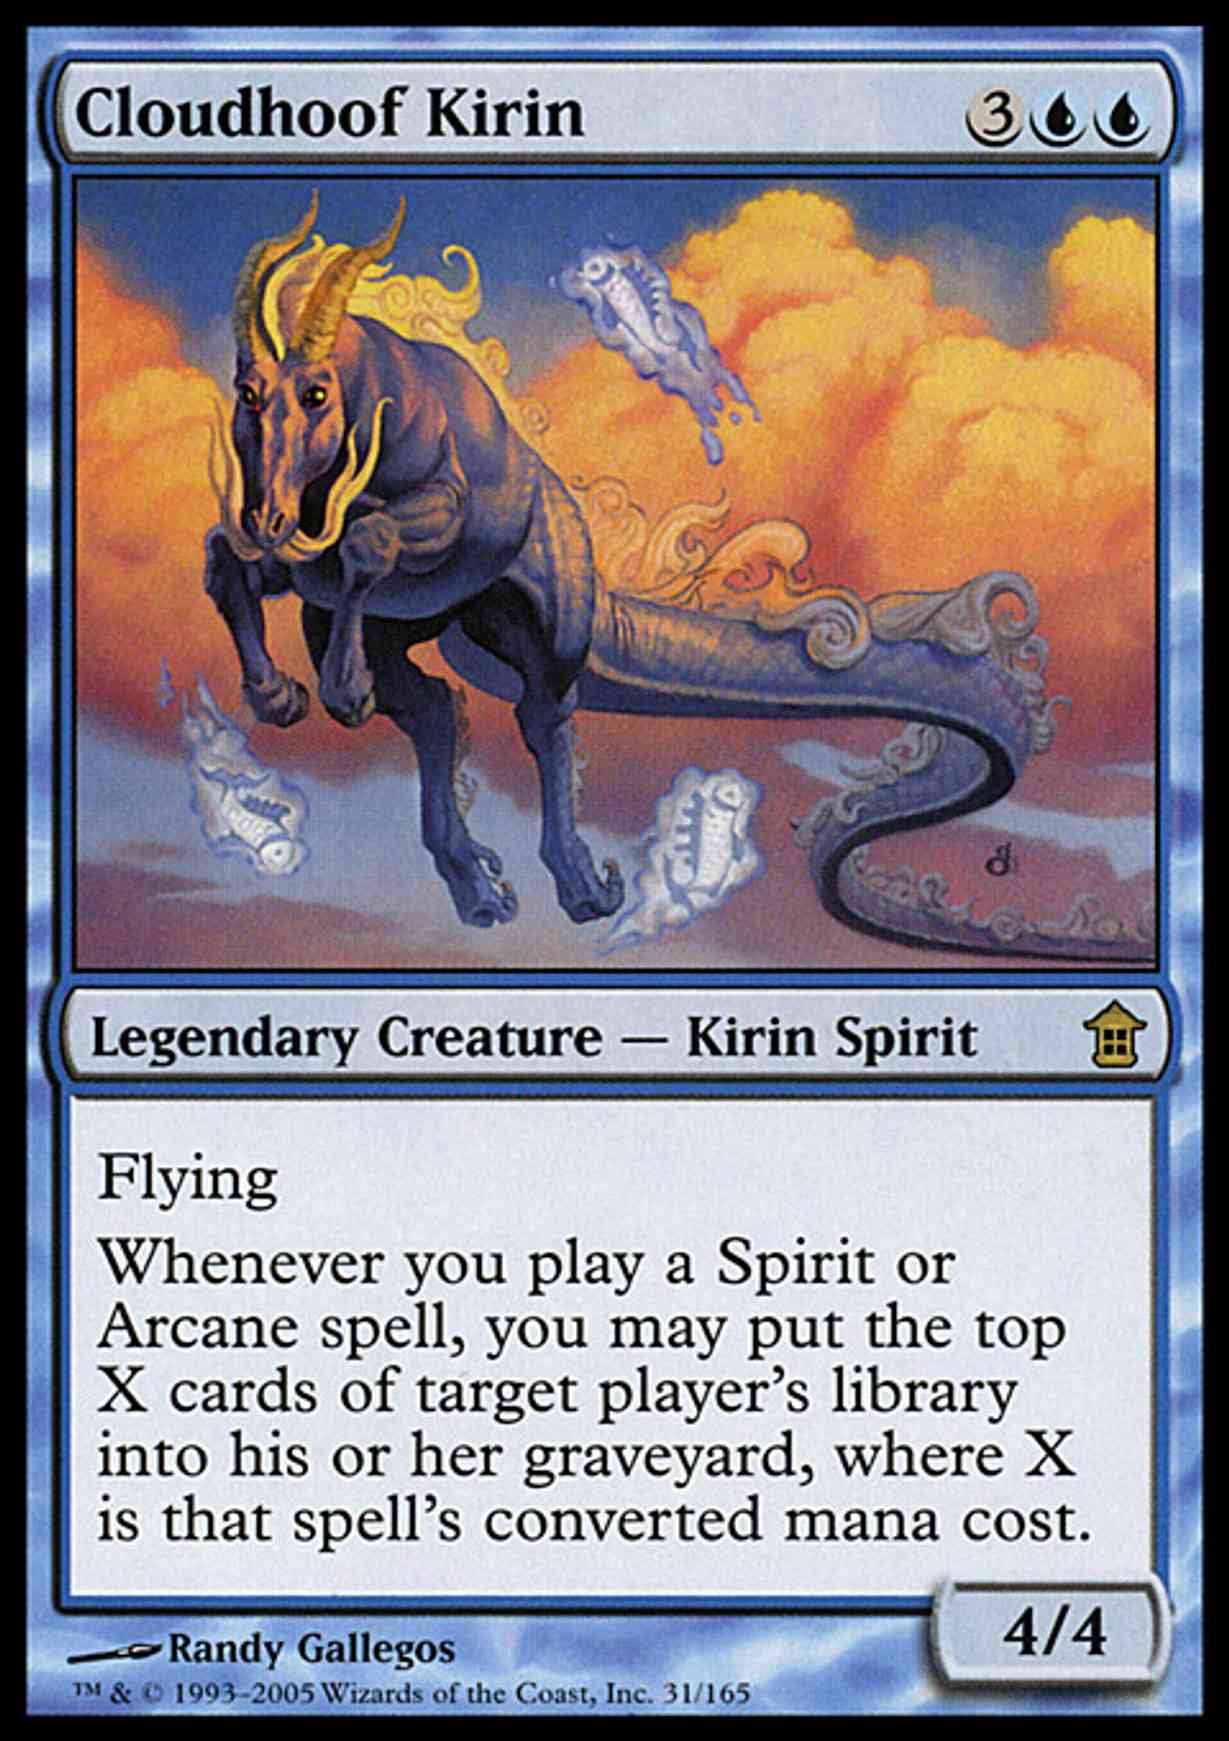 Cloudhoof Kirin magic card front